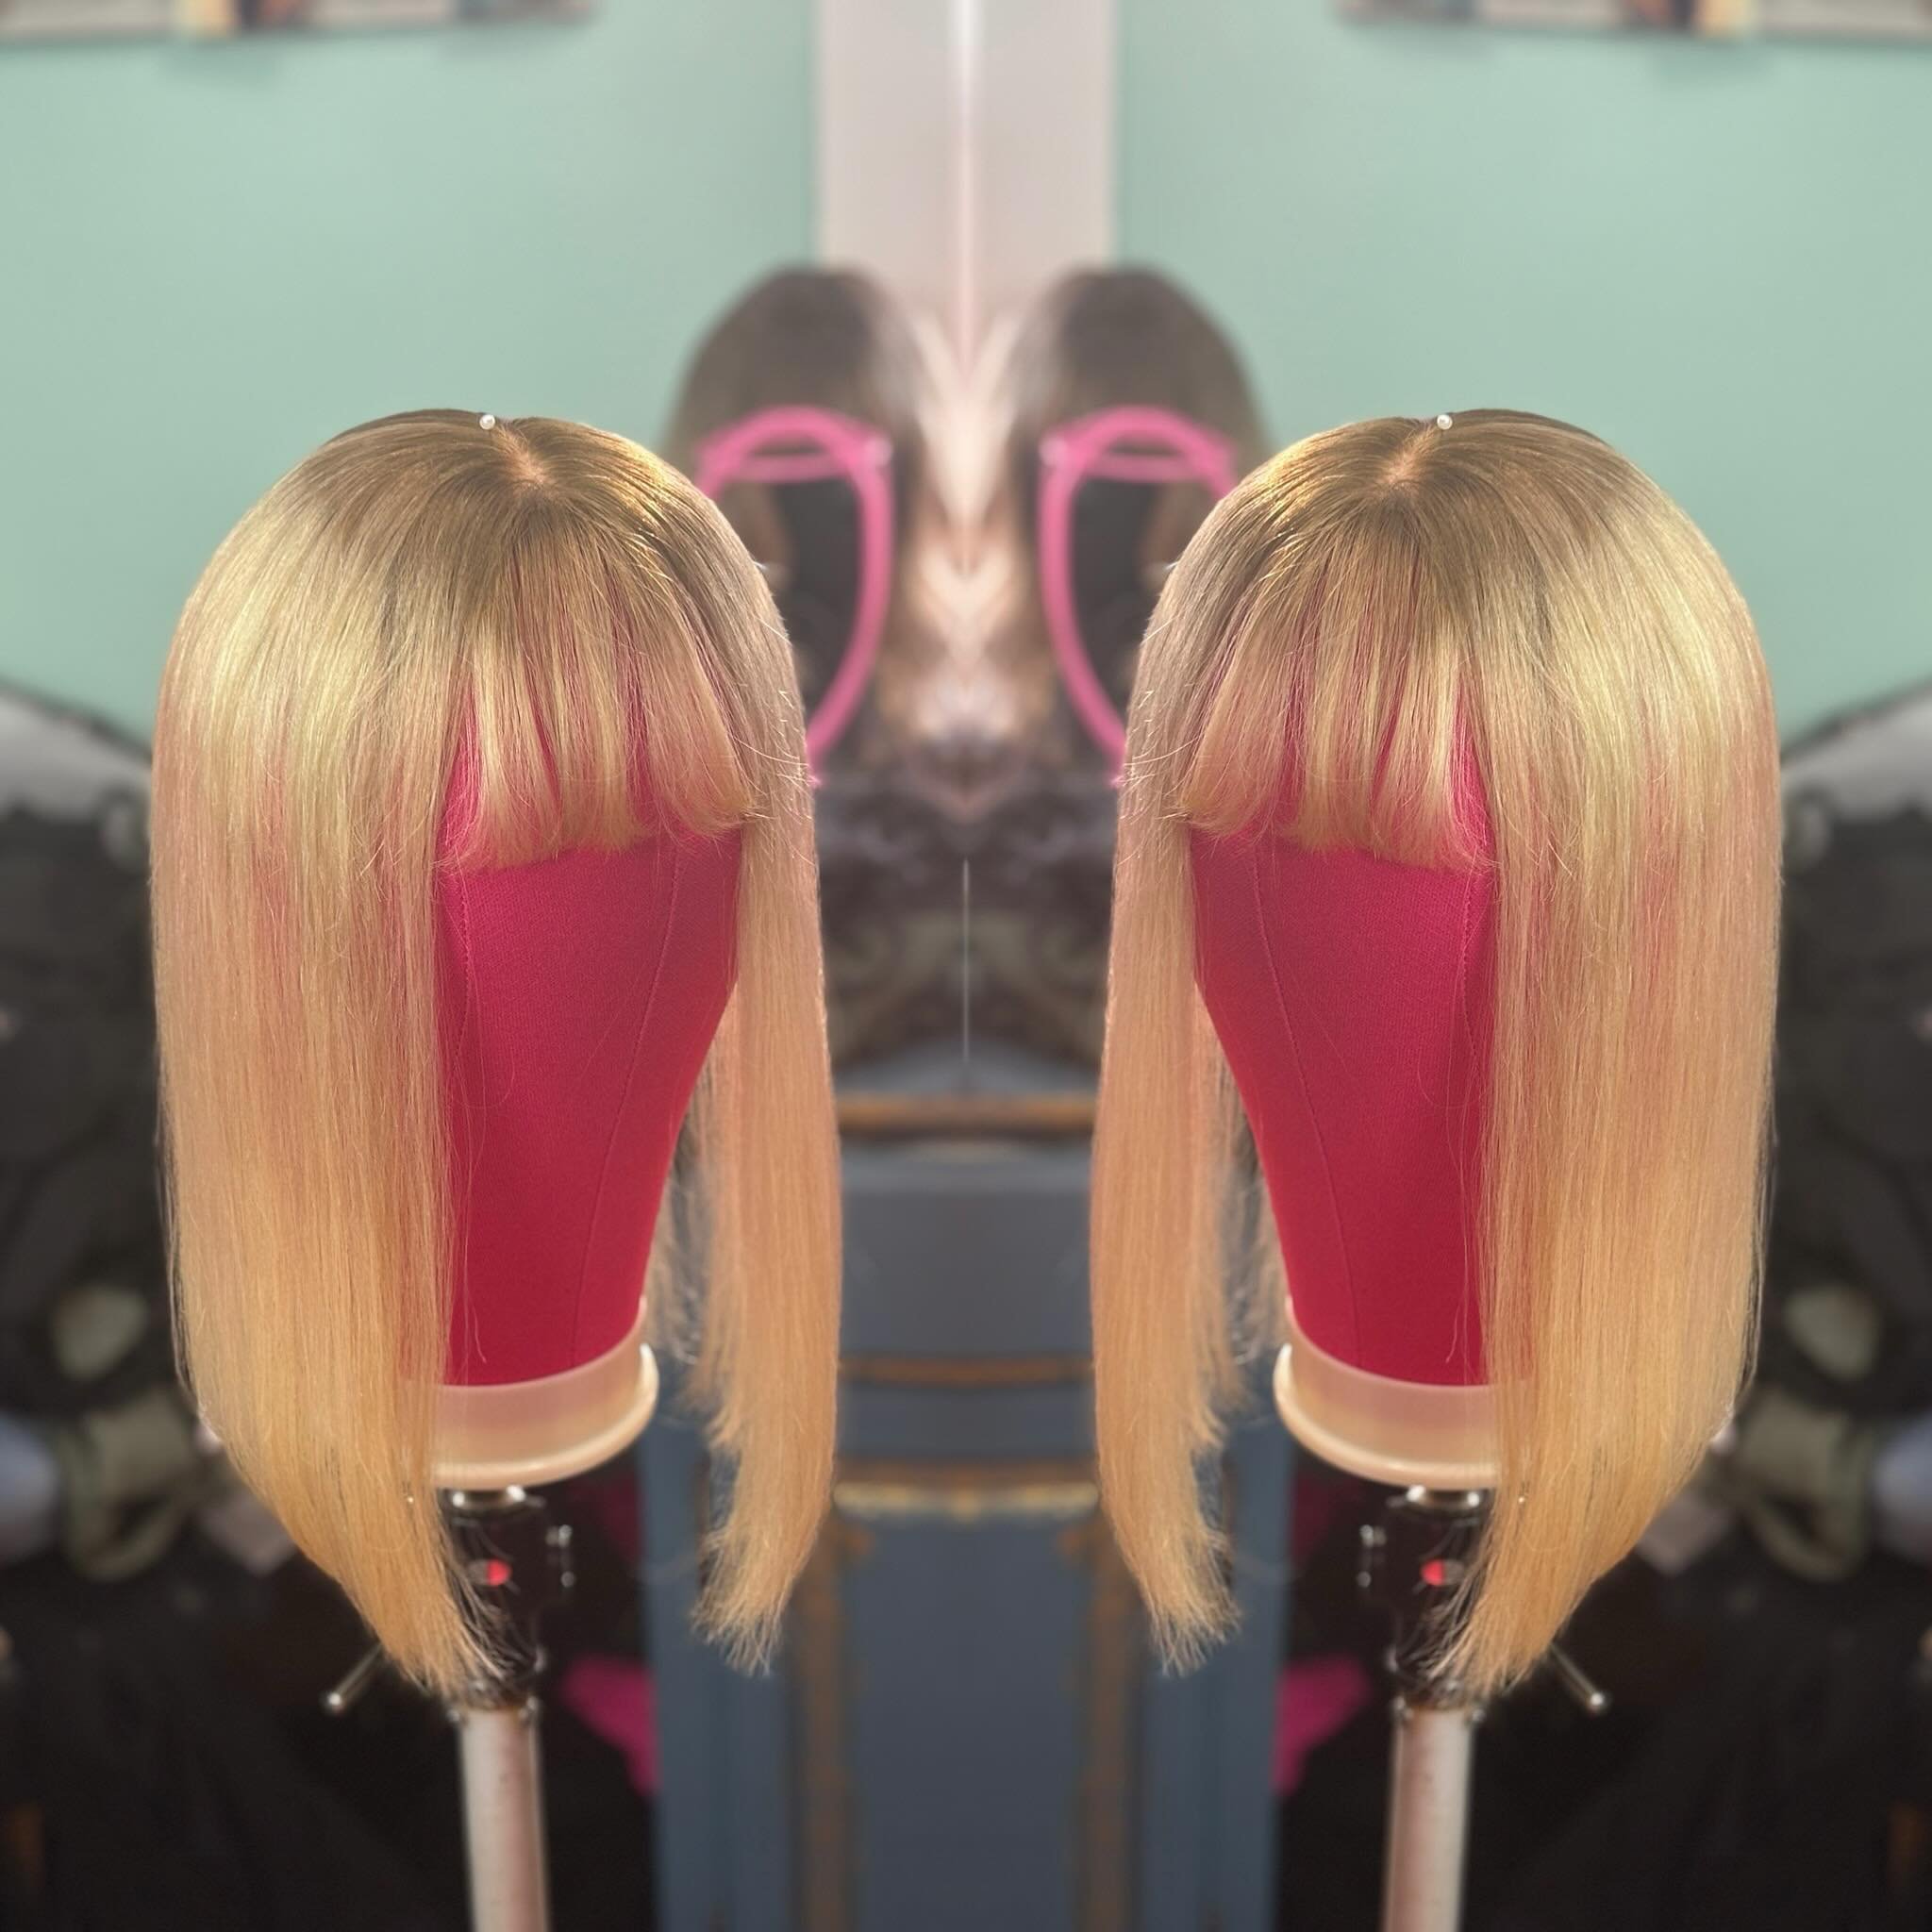 Custom hair topper 💜💜💜

Locks by Leash

#customhairtoppers#locksbyleash#hairlosssolutions❤️#hairlossofkingston#kingstonhairsalons#chemoawareness#hudsonvalleyhairtoppers#newyorkhairtoppers#newyorkwigmaker